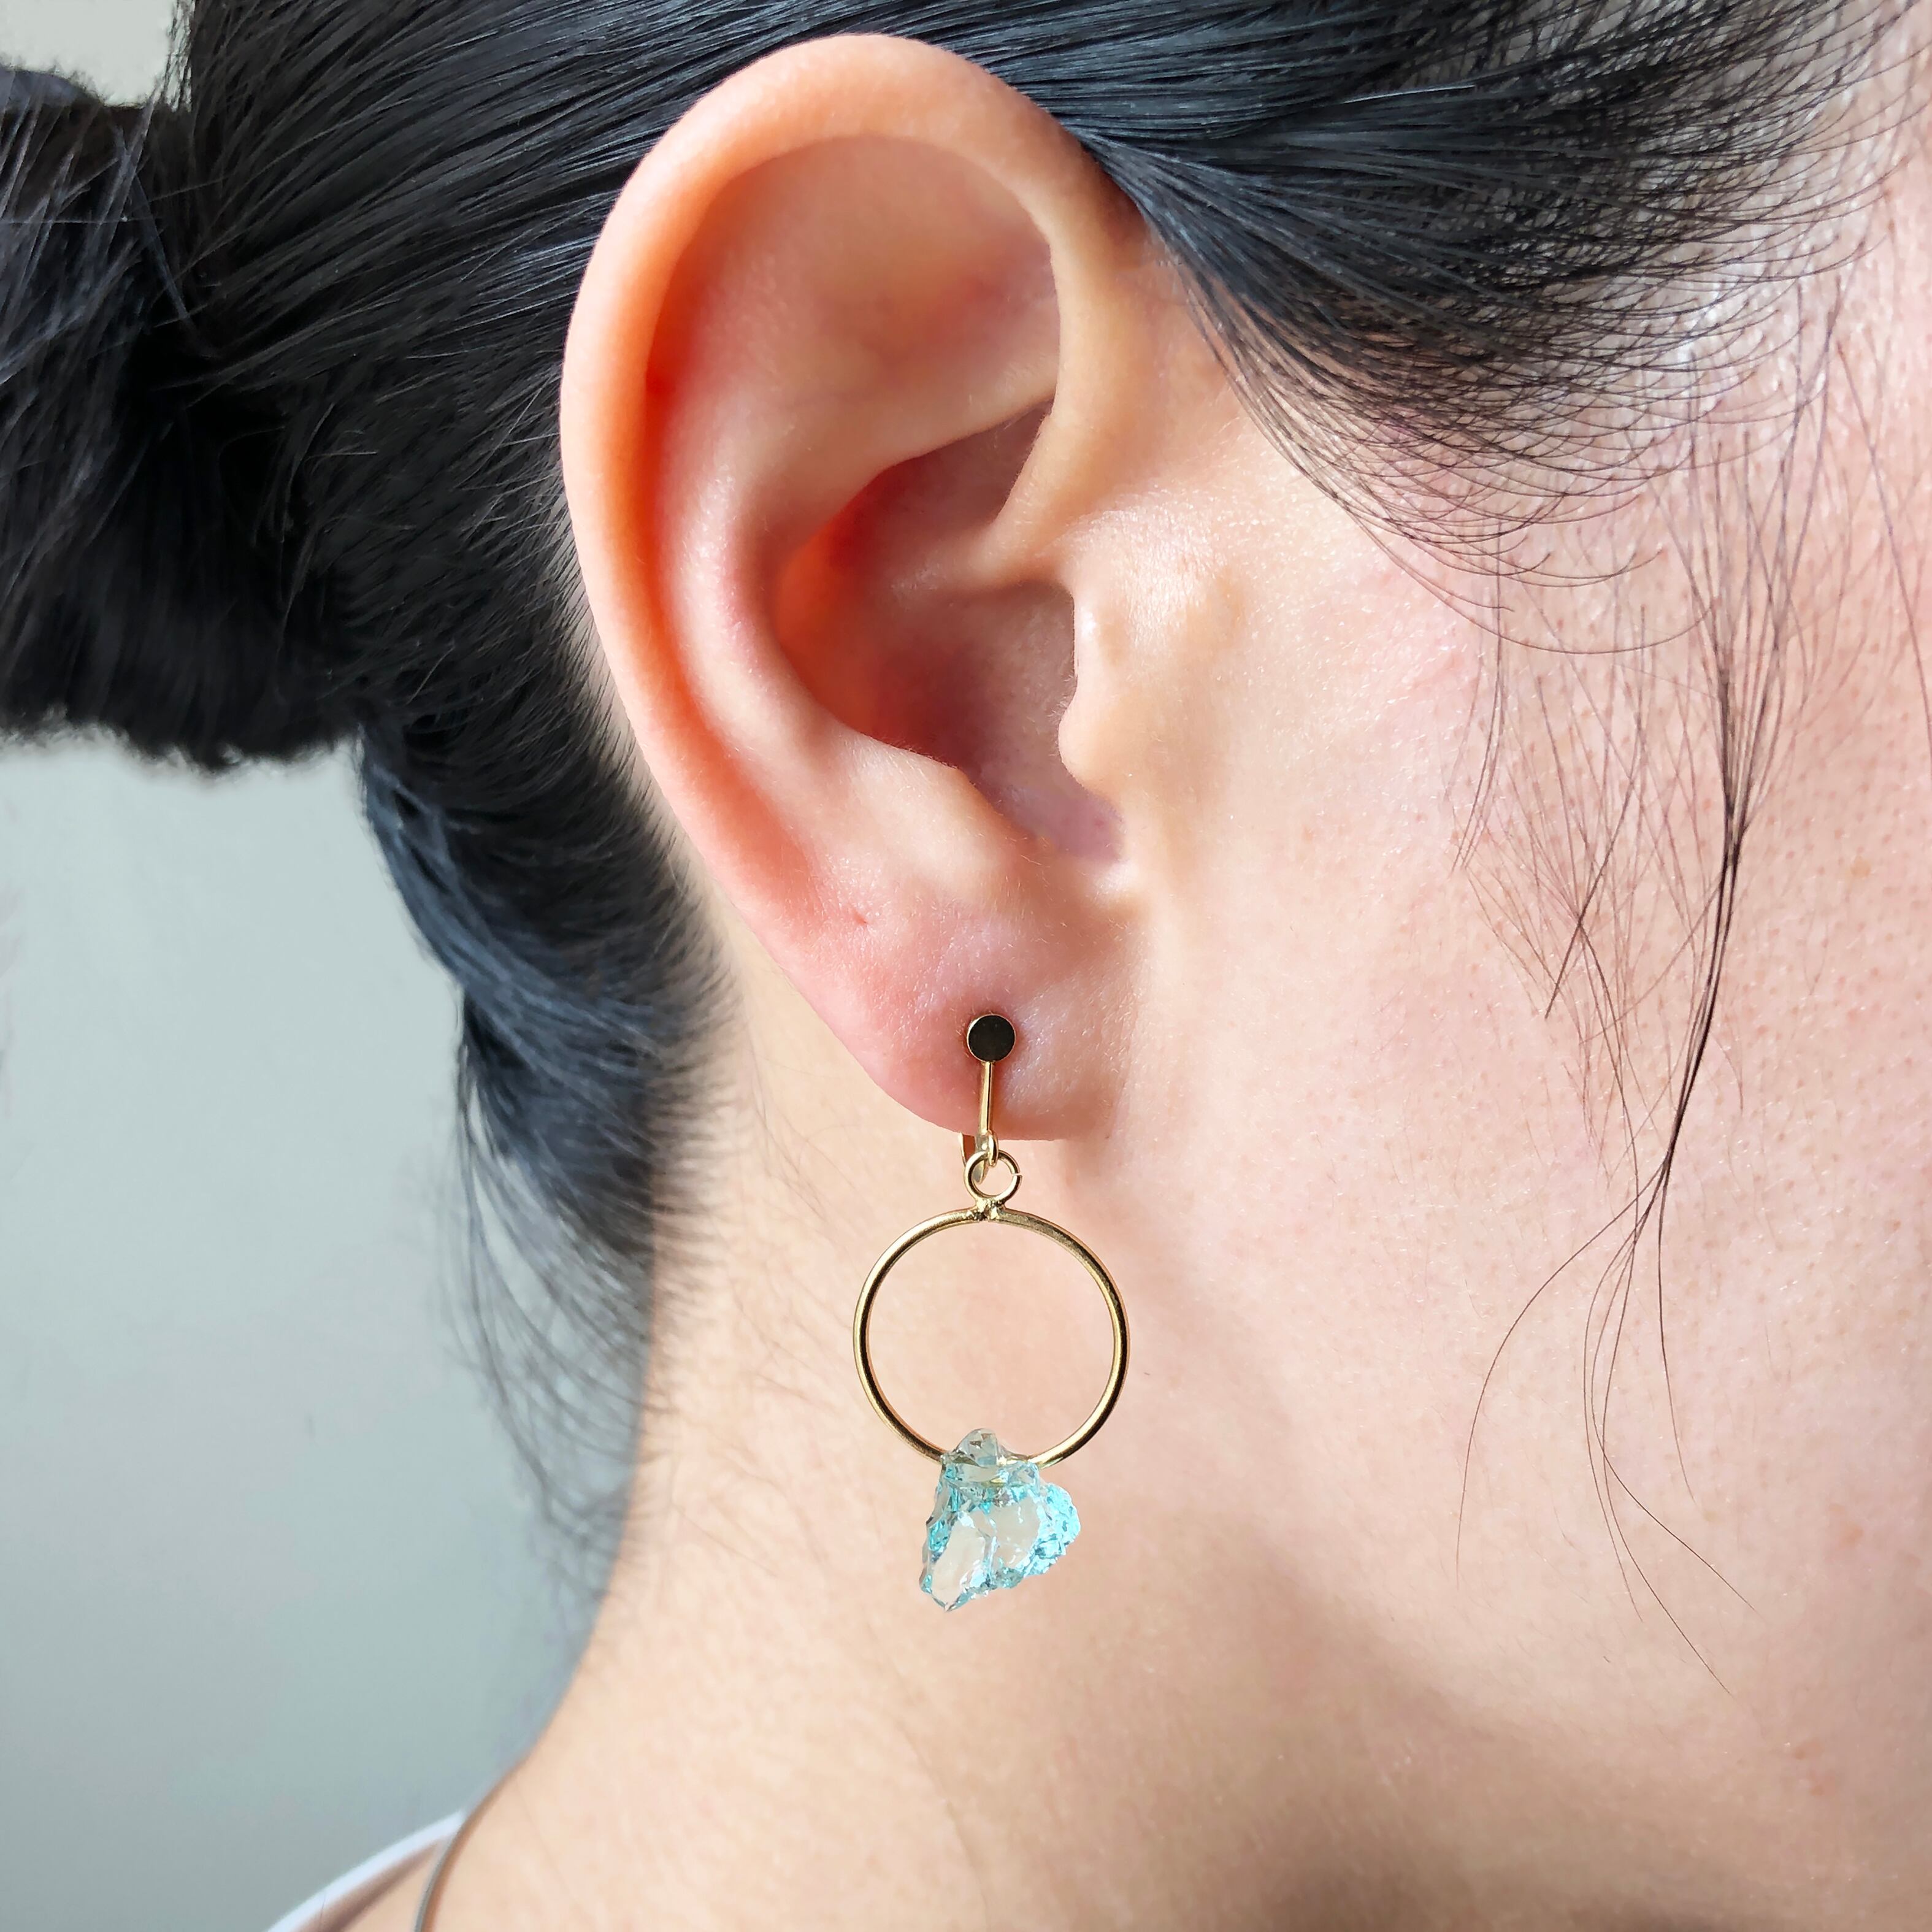 【ONLINE shop限定】FRAGMENT earring 08